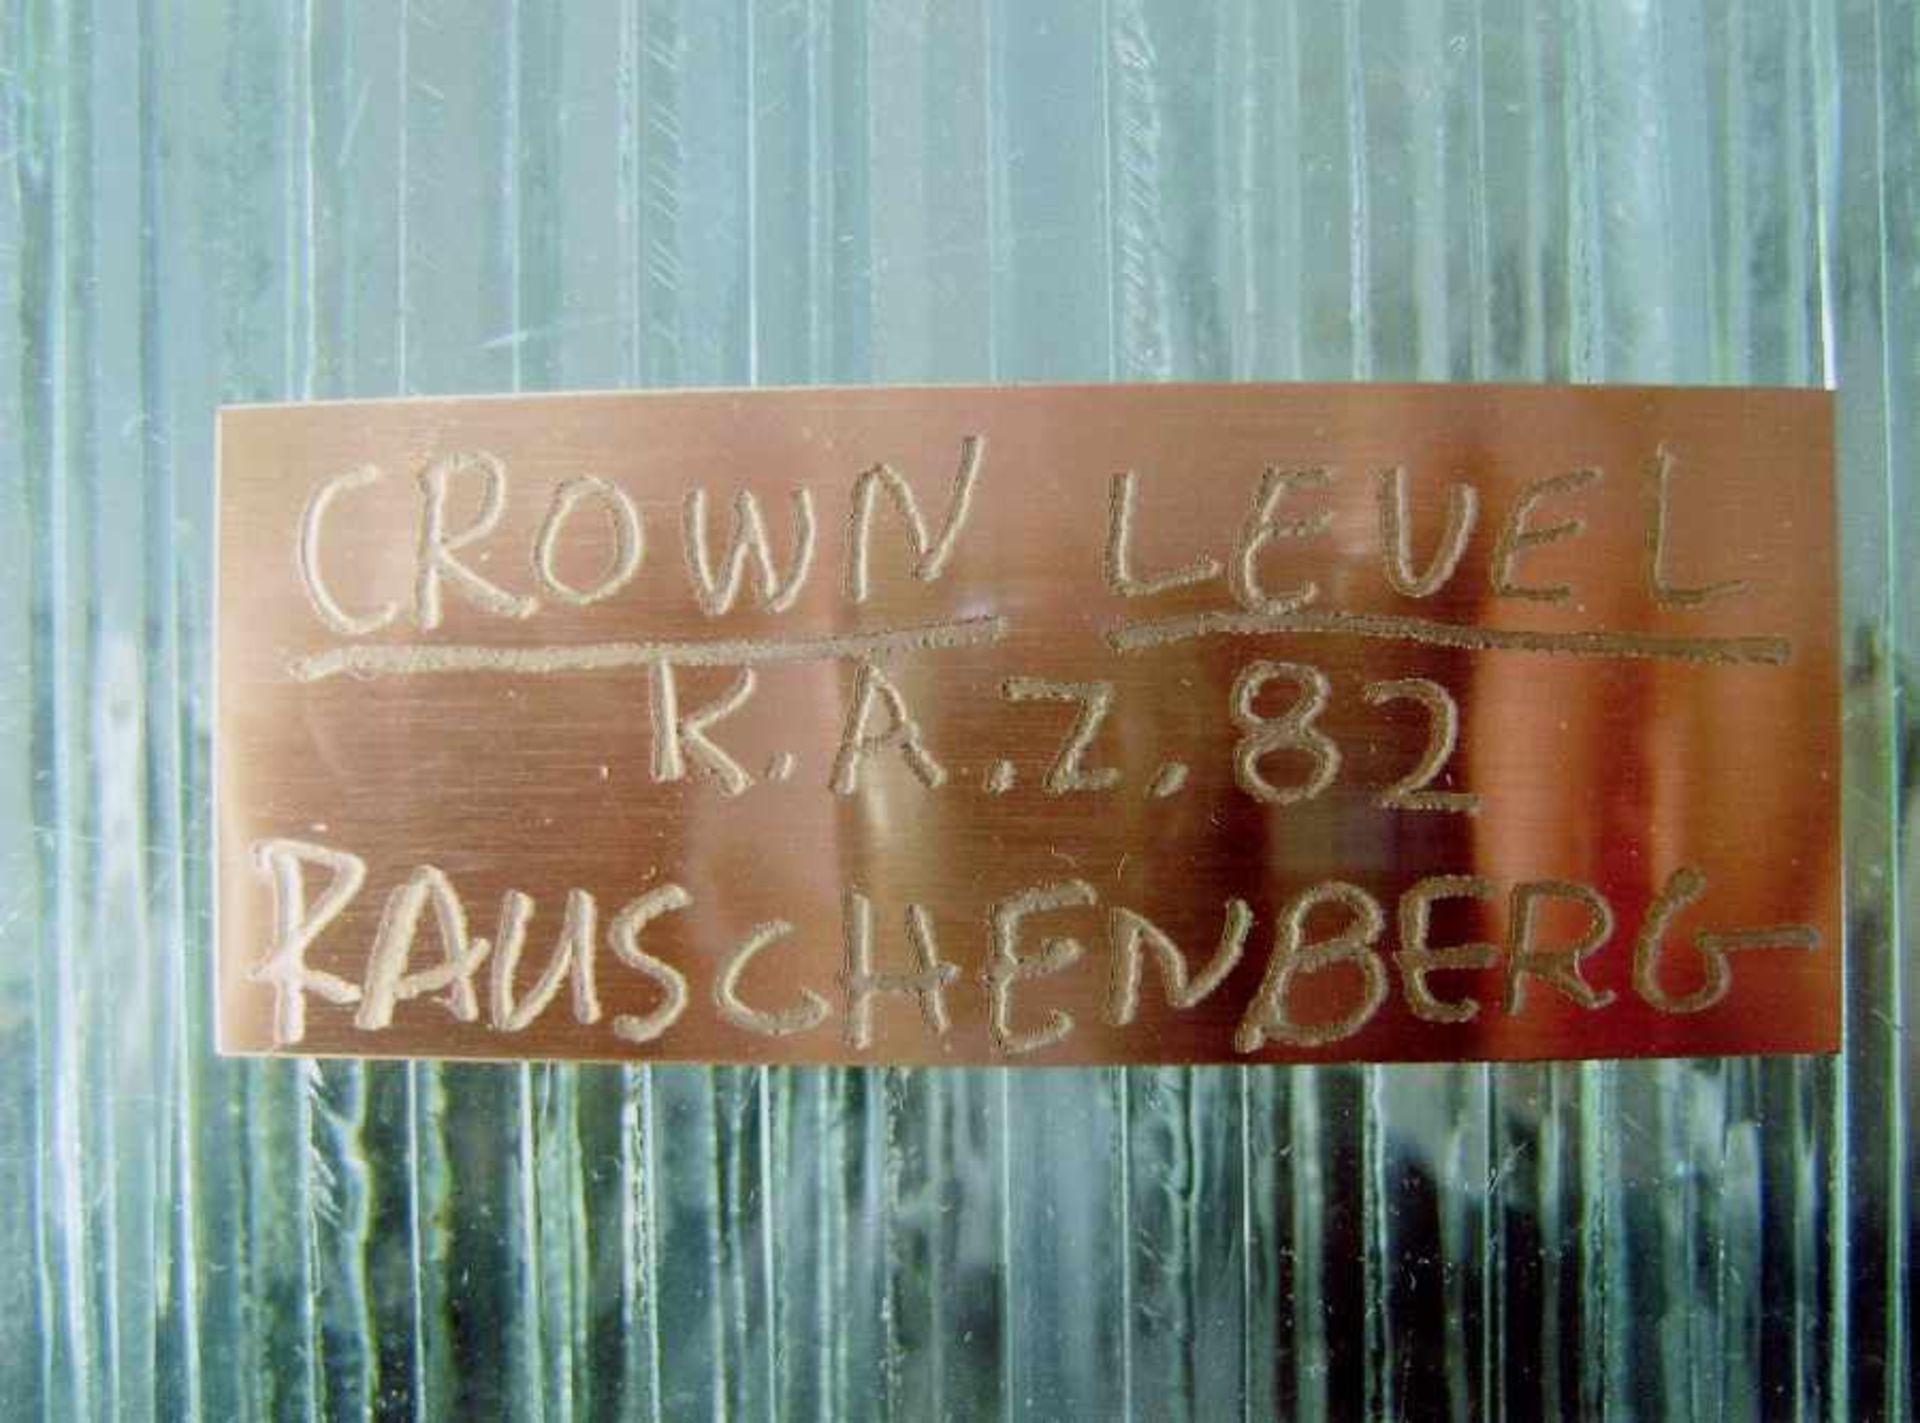 Robert Rauschenberg 1925 Port Arthur - 2008 Captiva Island Crown Level (Kabal American Zephyr) - Image 2 of 2